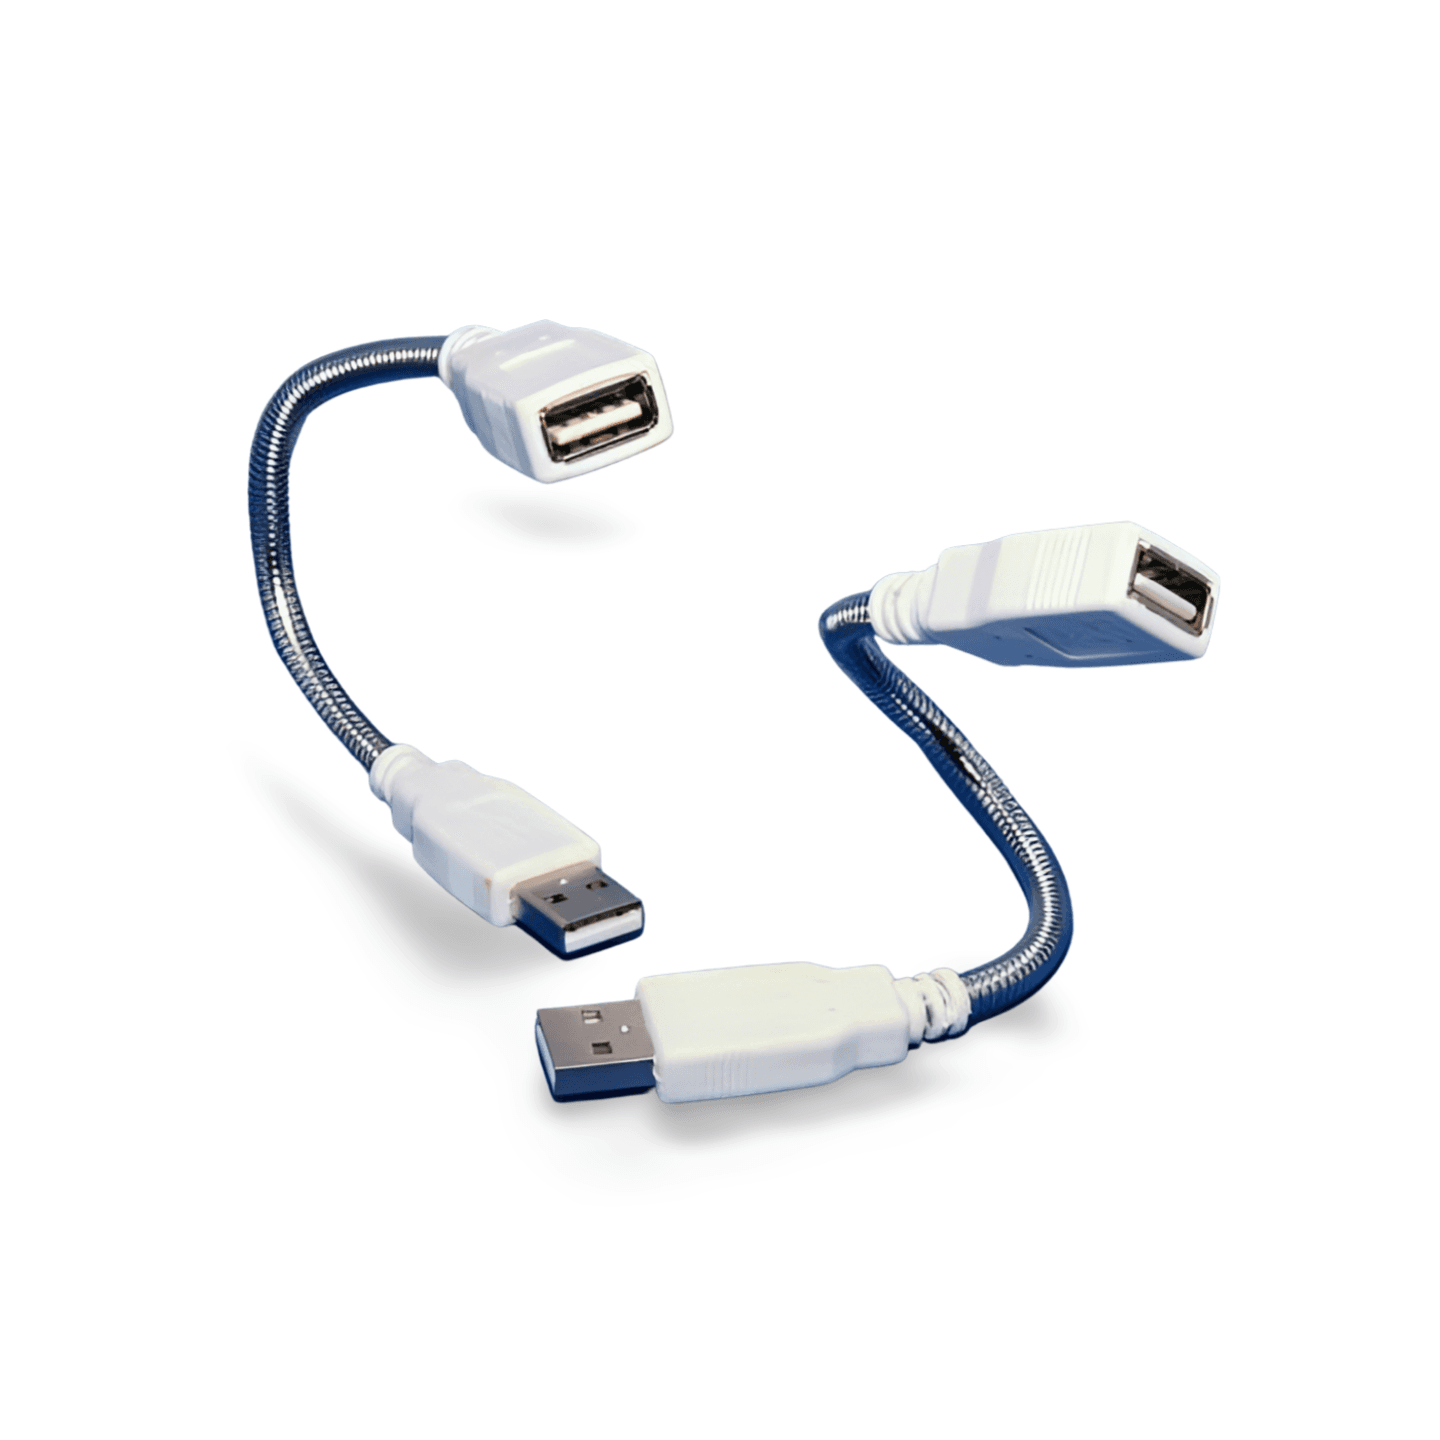 8in USB 2.0 Gooseneck Cable Chrome Flexible Male to Female white